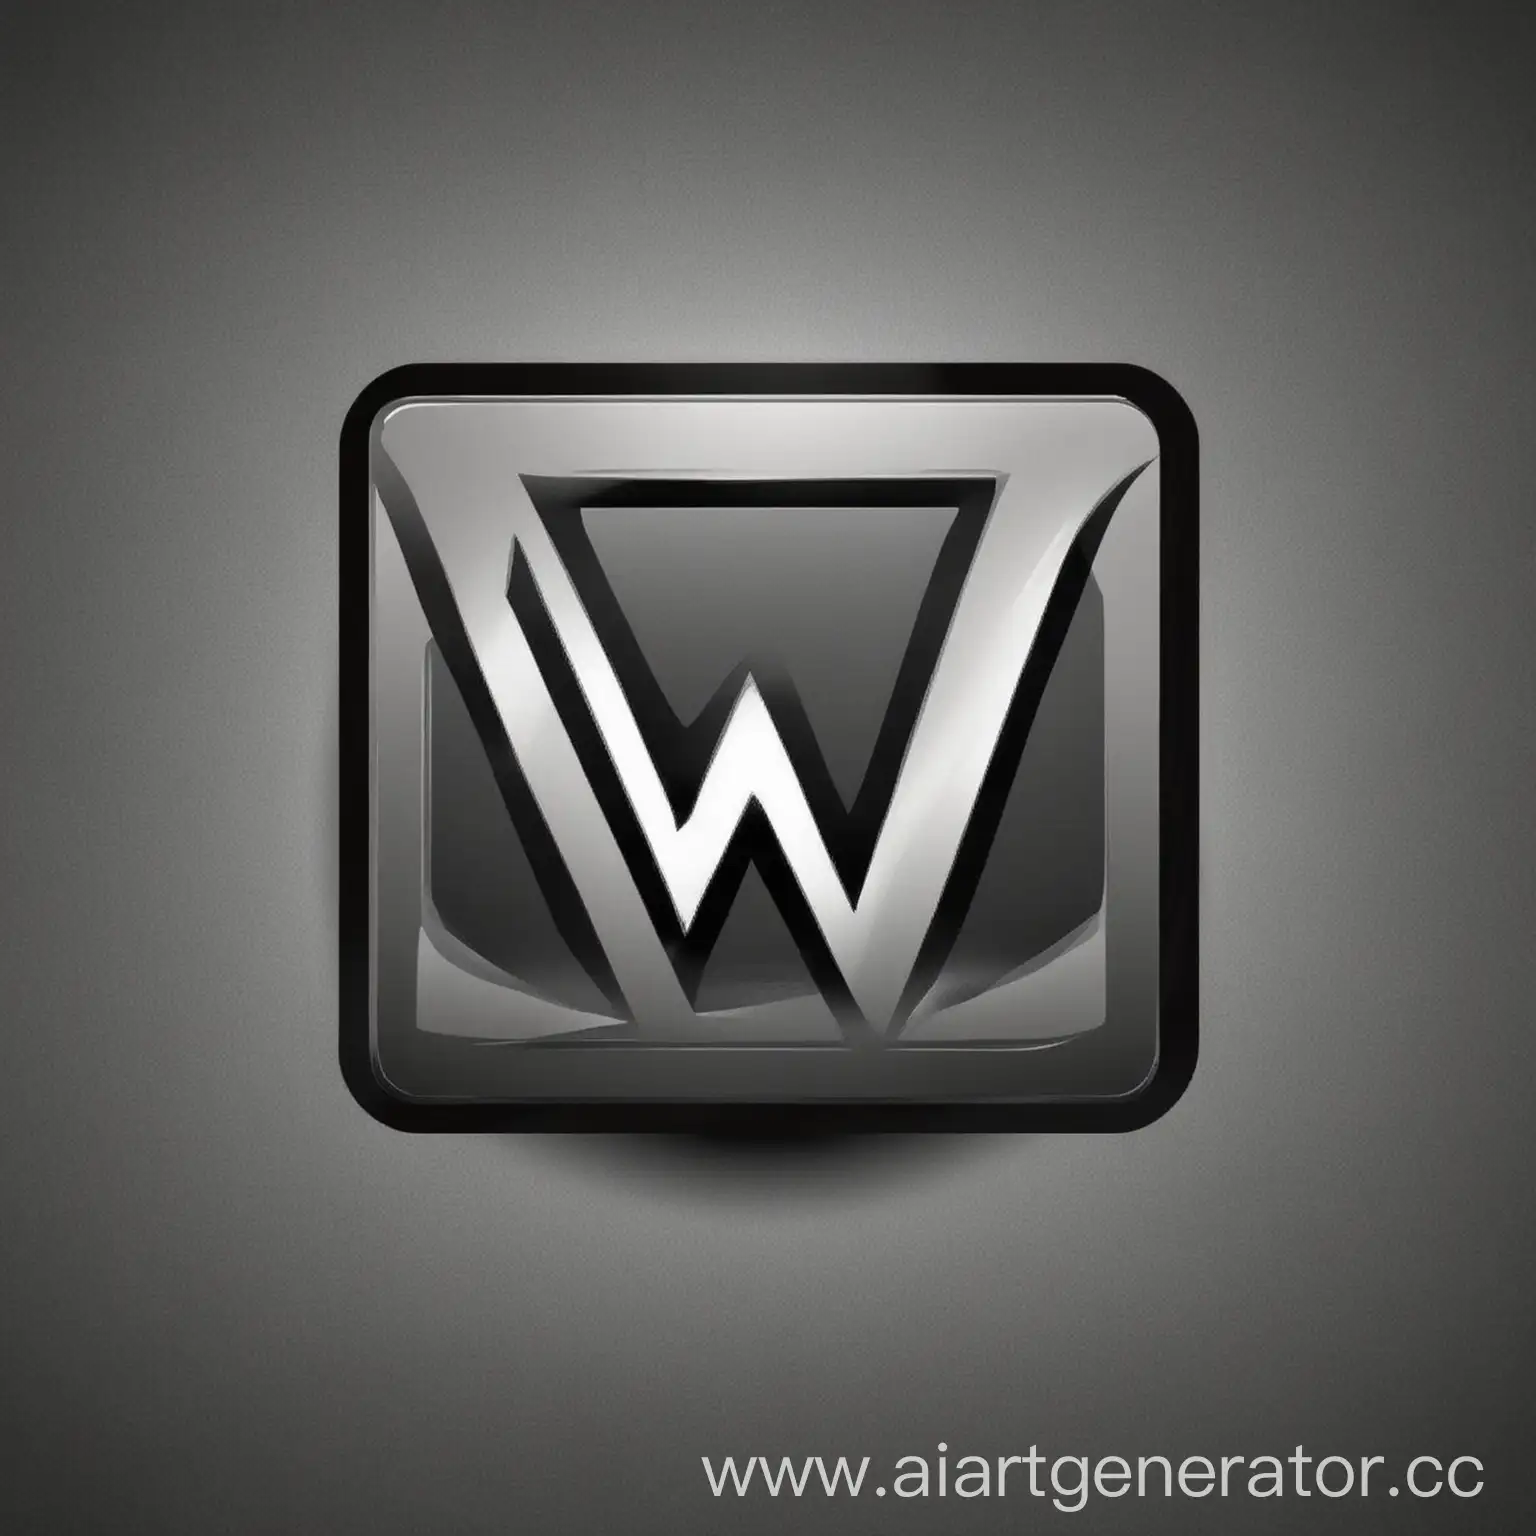 Modern-and-Sleek-Logo-Design-for-WebWorks-Company